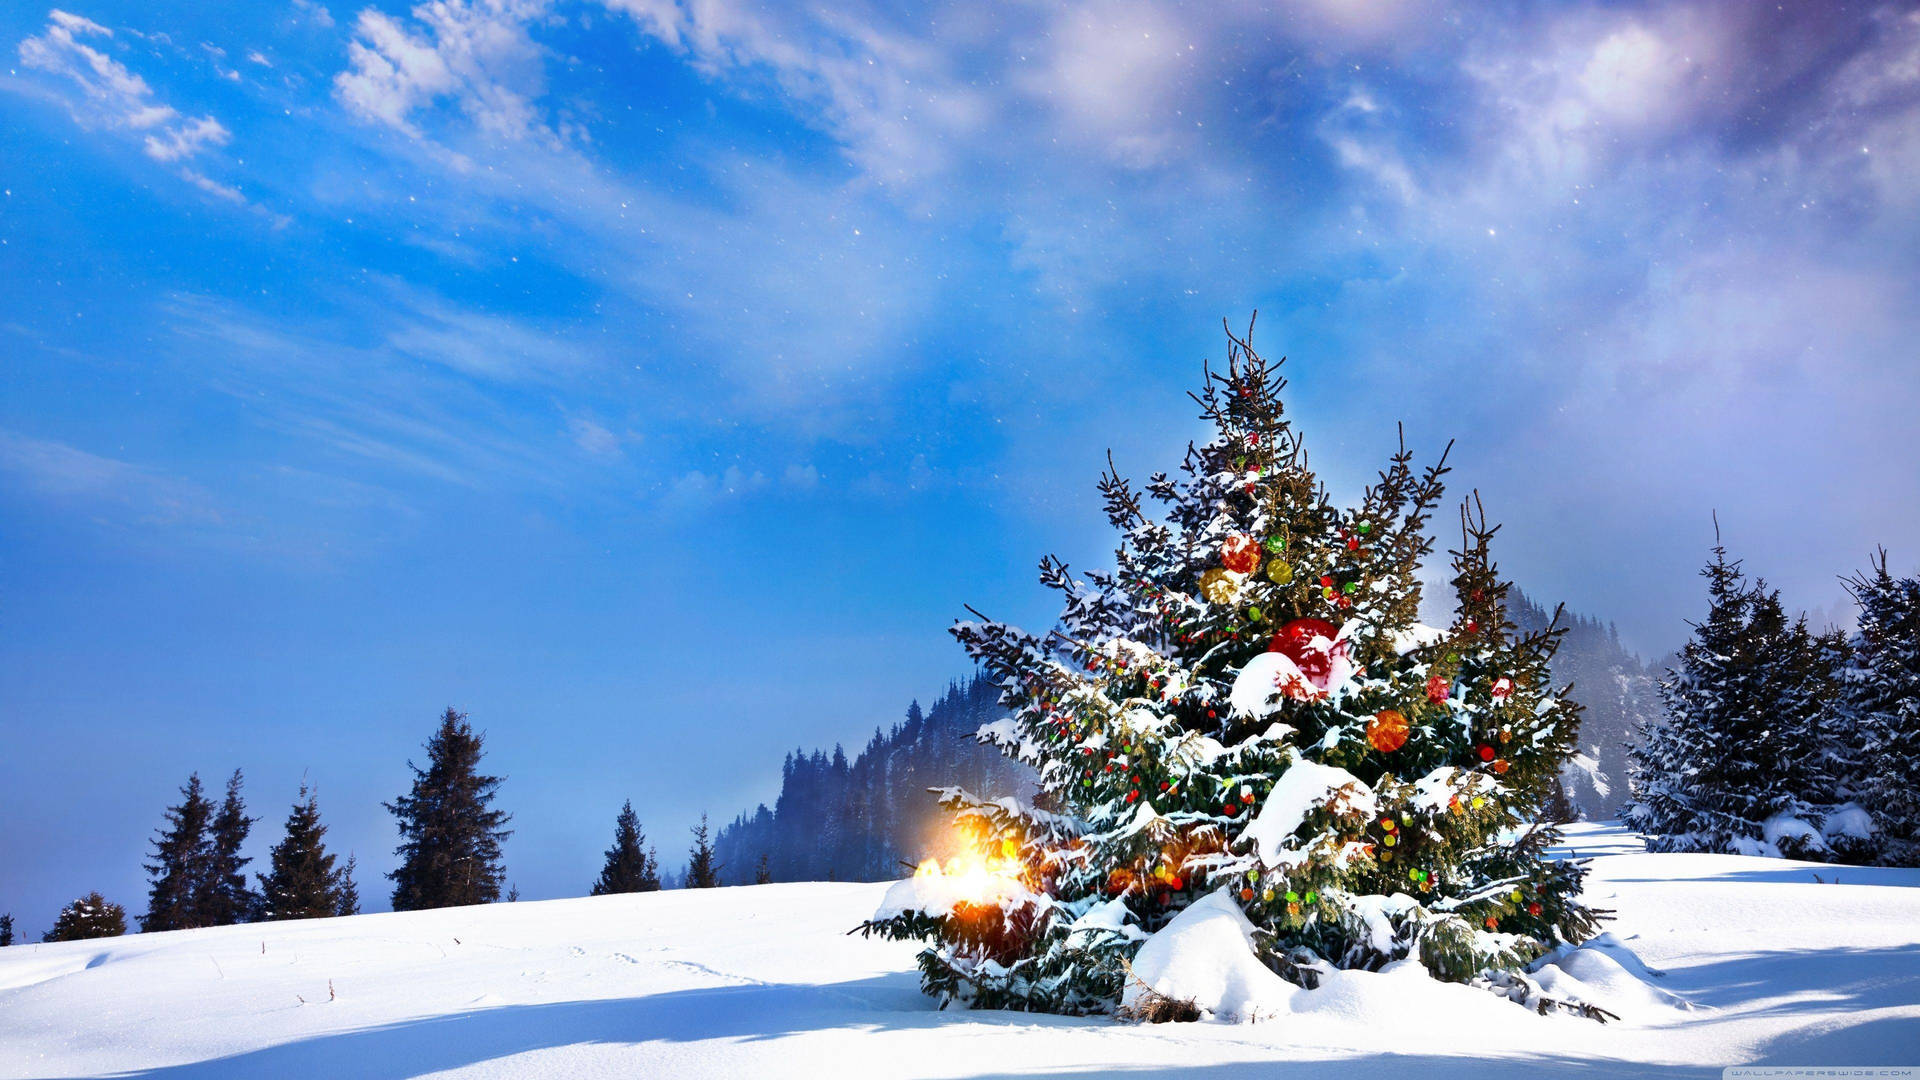 Enjoy the Joyful Holiday Season Wallpaper